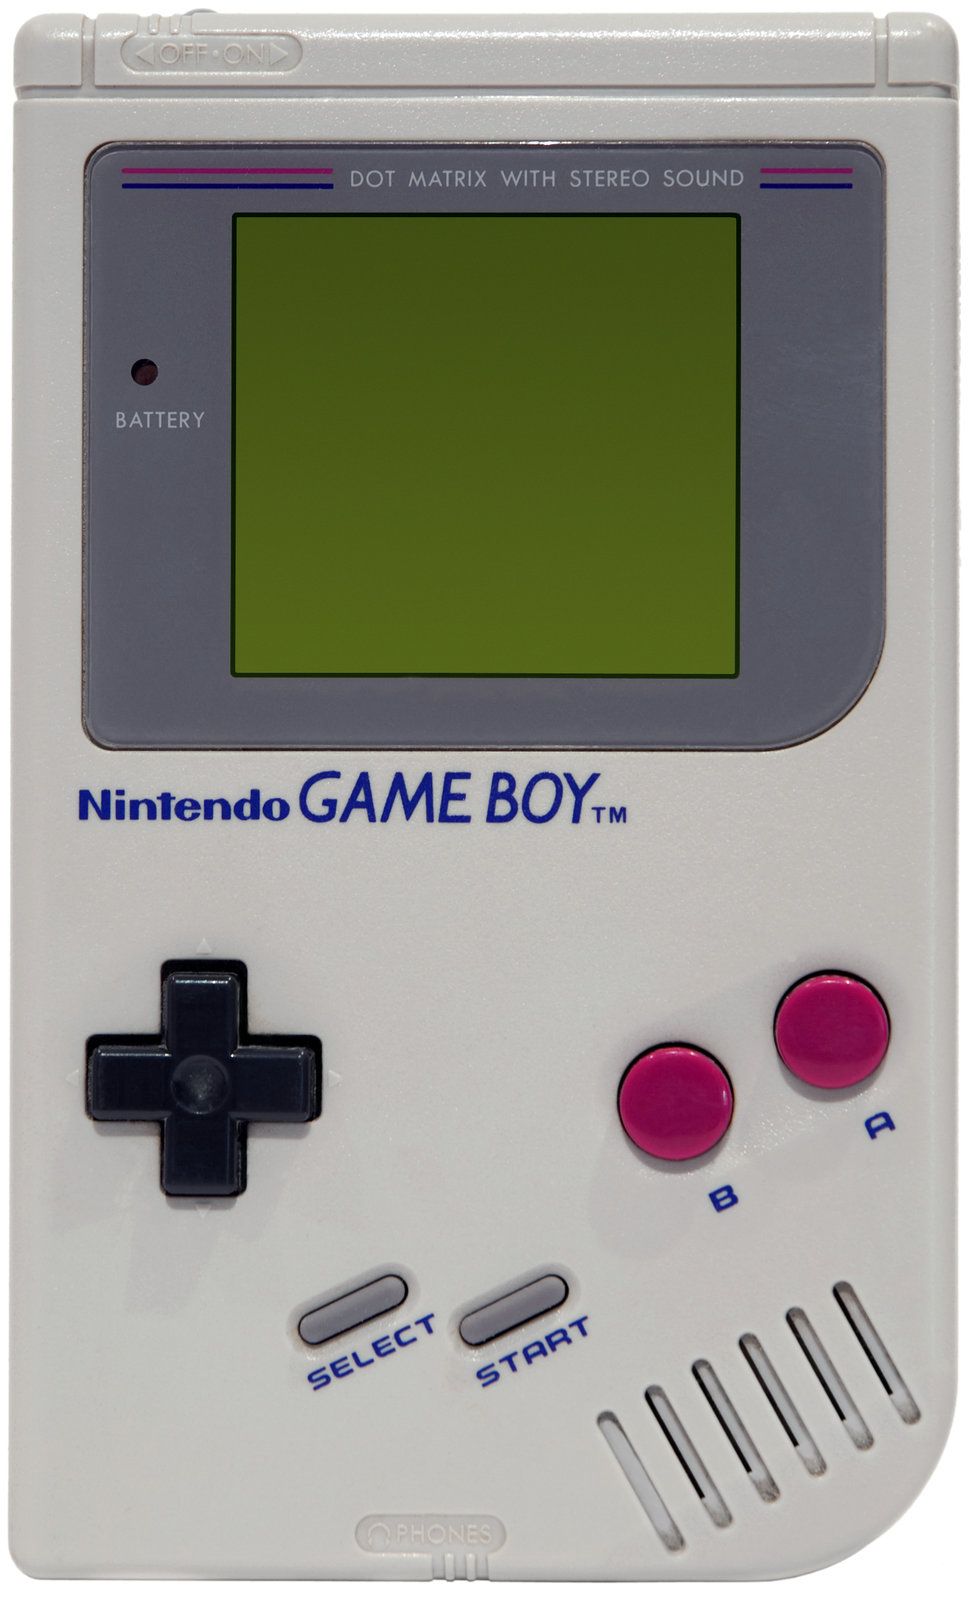 Nintendo Game Boy z roku 1989 (Zdroj: